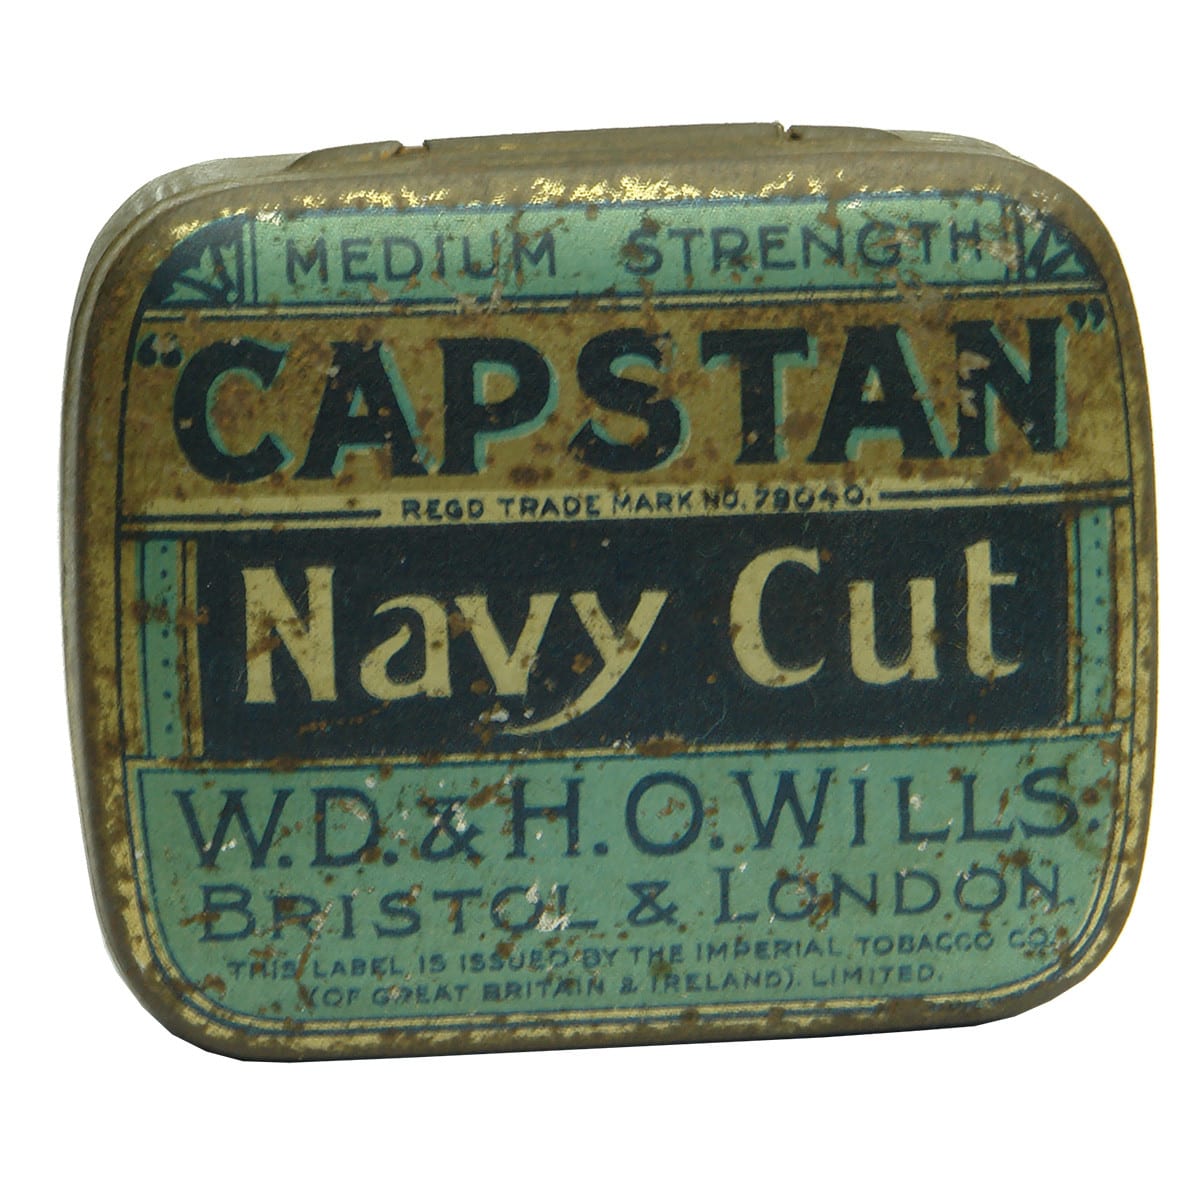 Tobacco Tin. Capstan Navy Cut. W. D. & H. O. Wills, Bristol & London. Very small size.